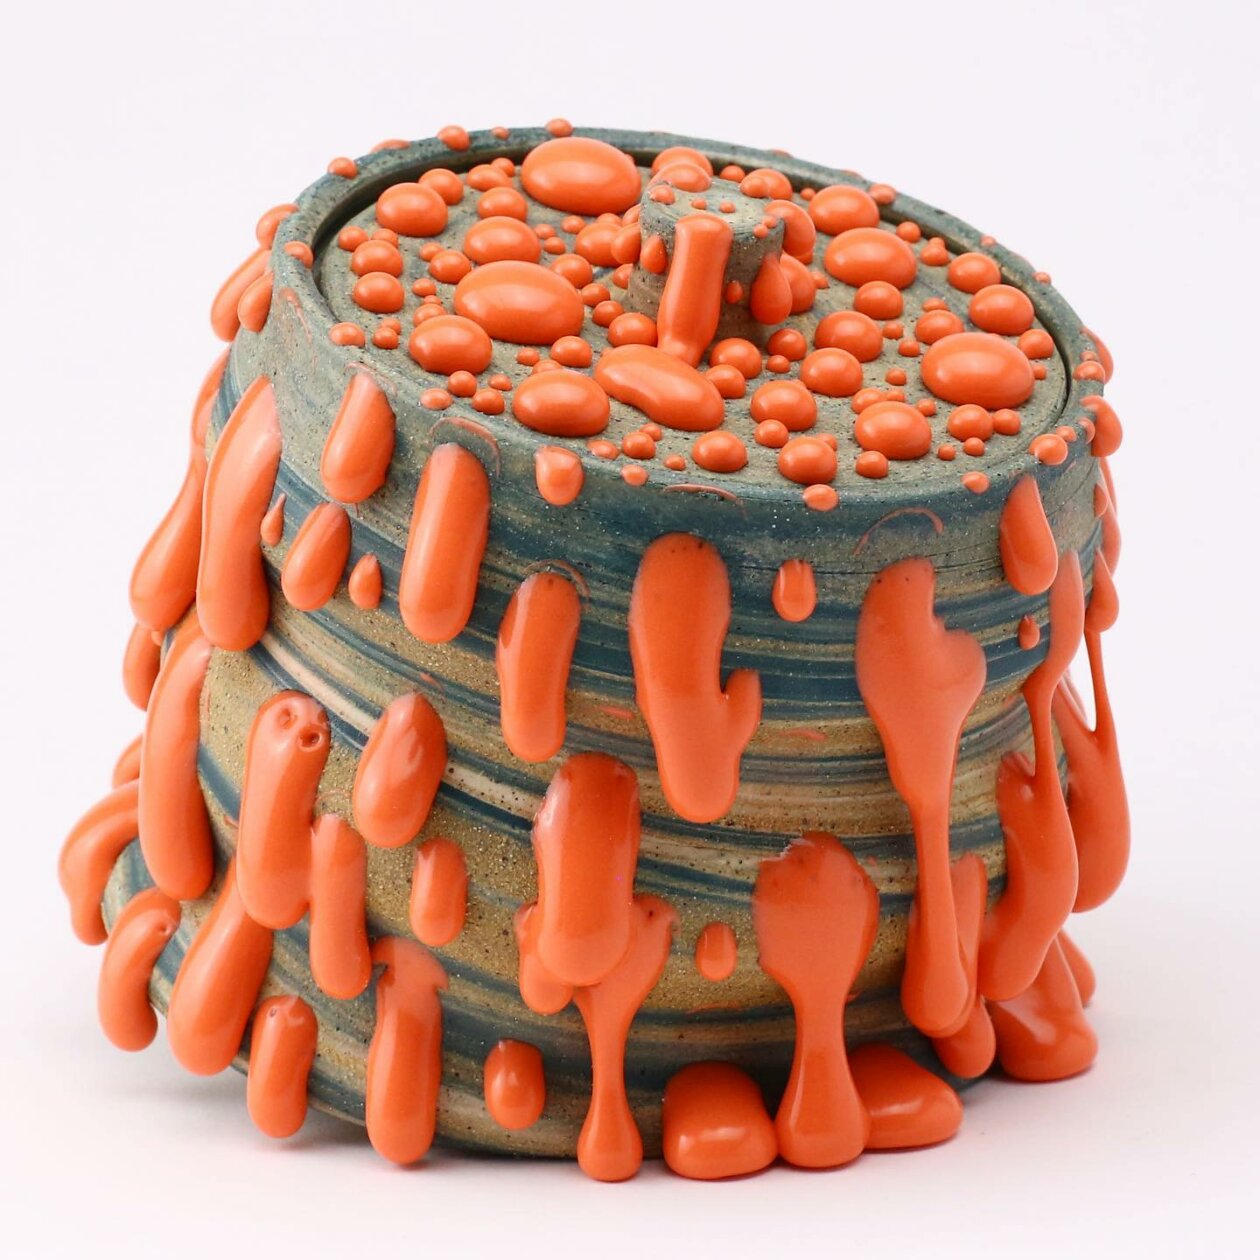 Playful Ceramic Vessels Of Strange Creatures And Melted Shapes By Philip Kupferschmidt 3